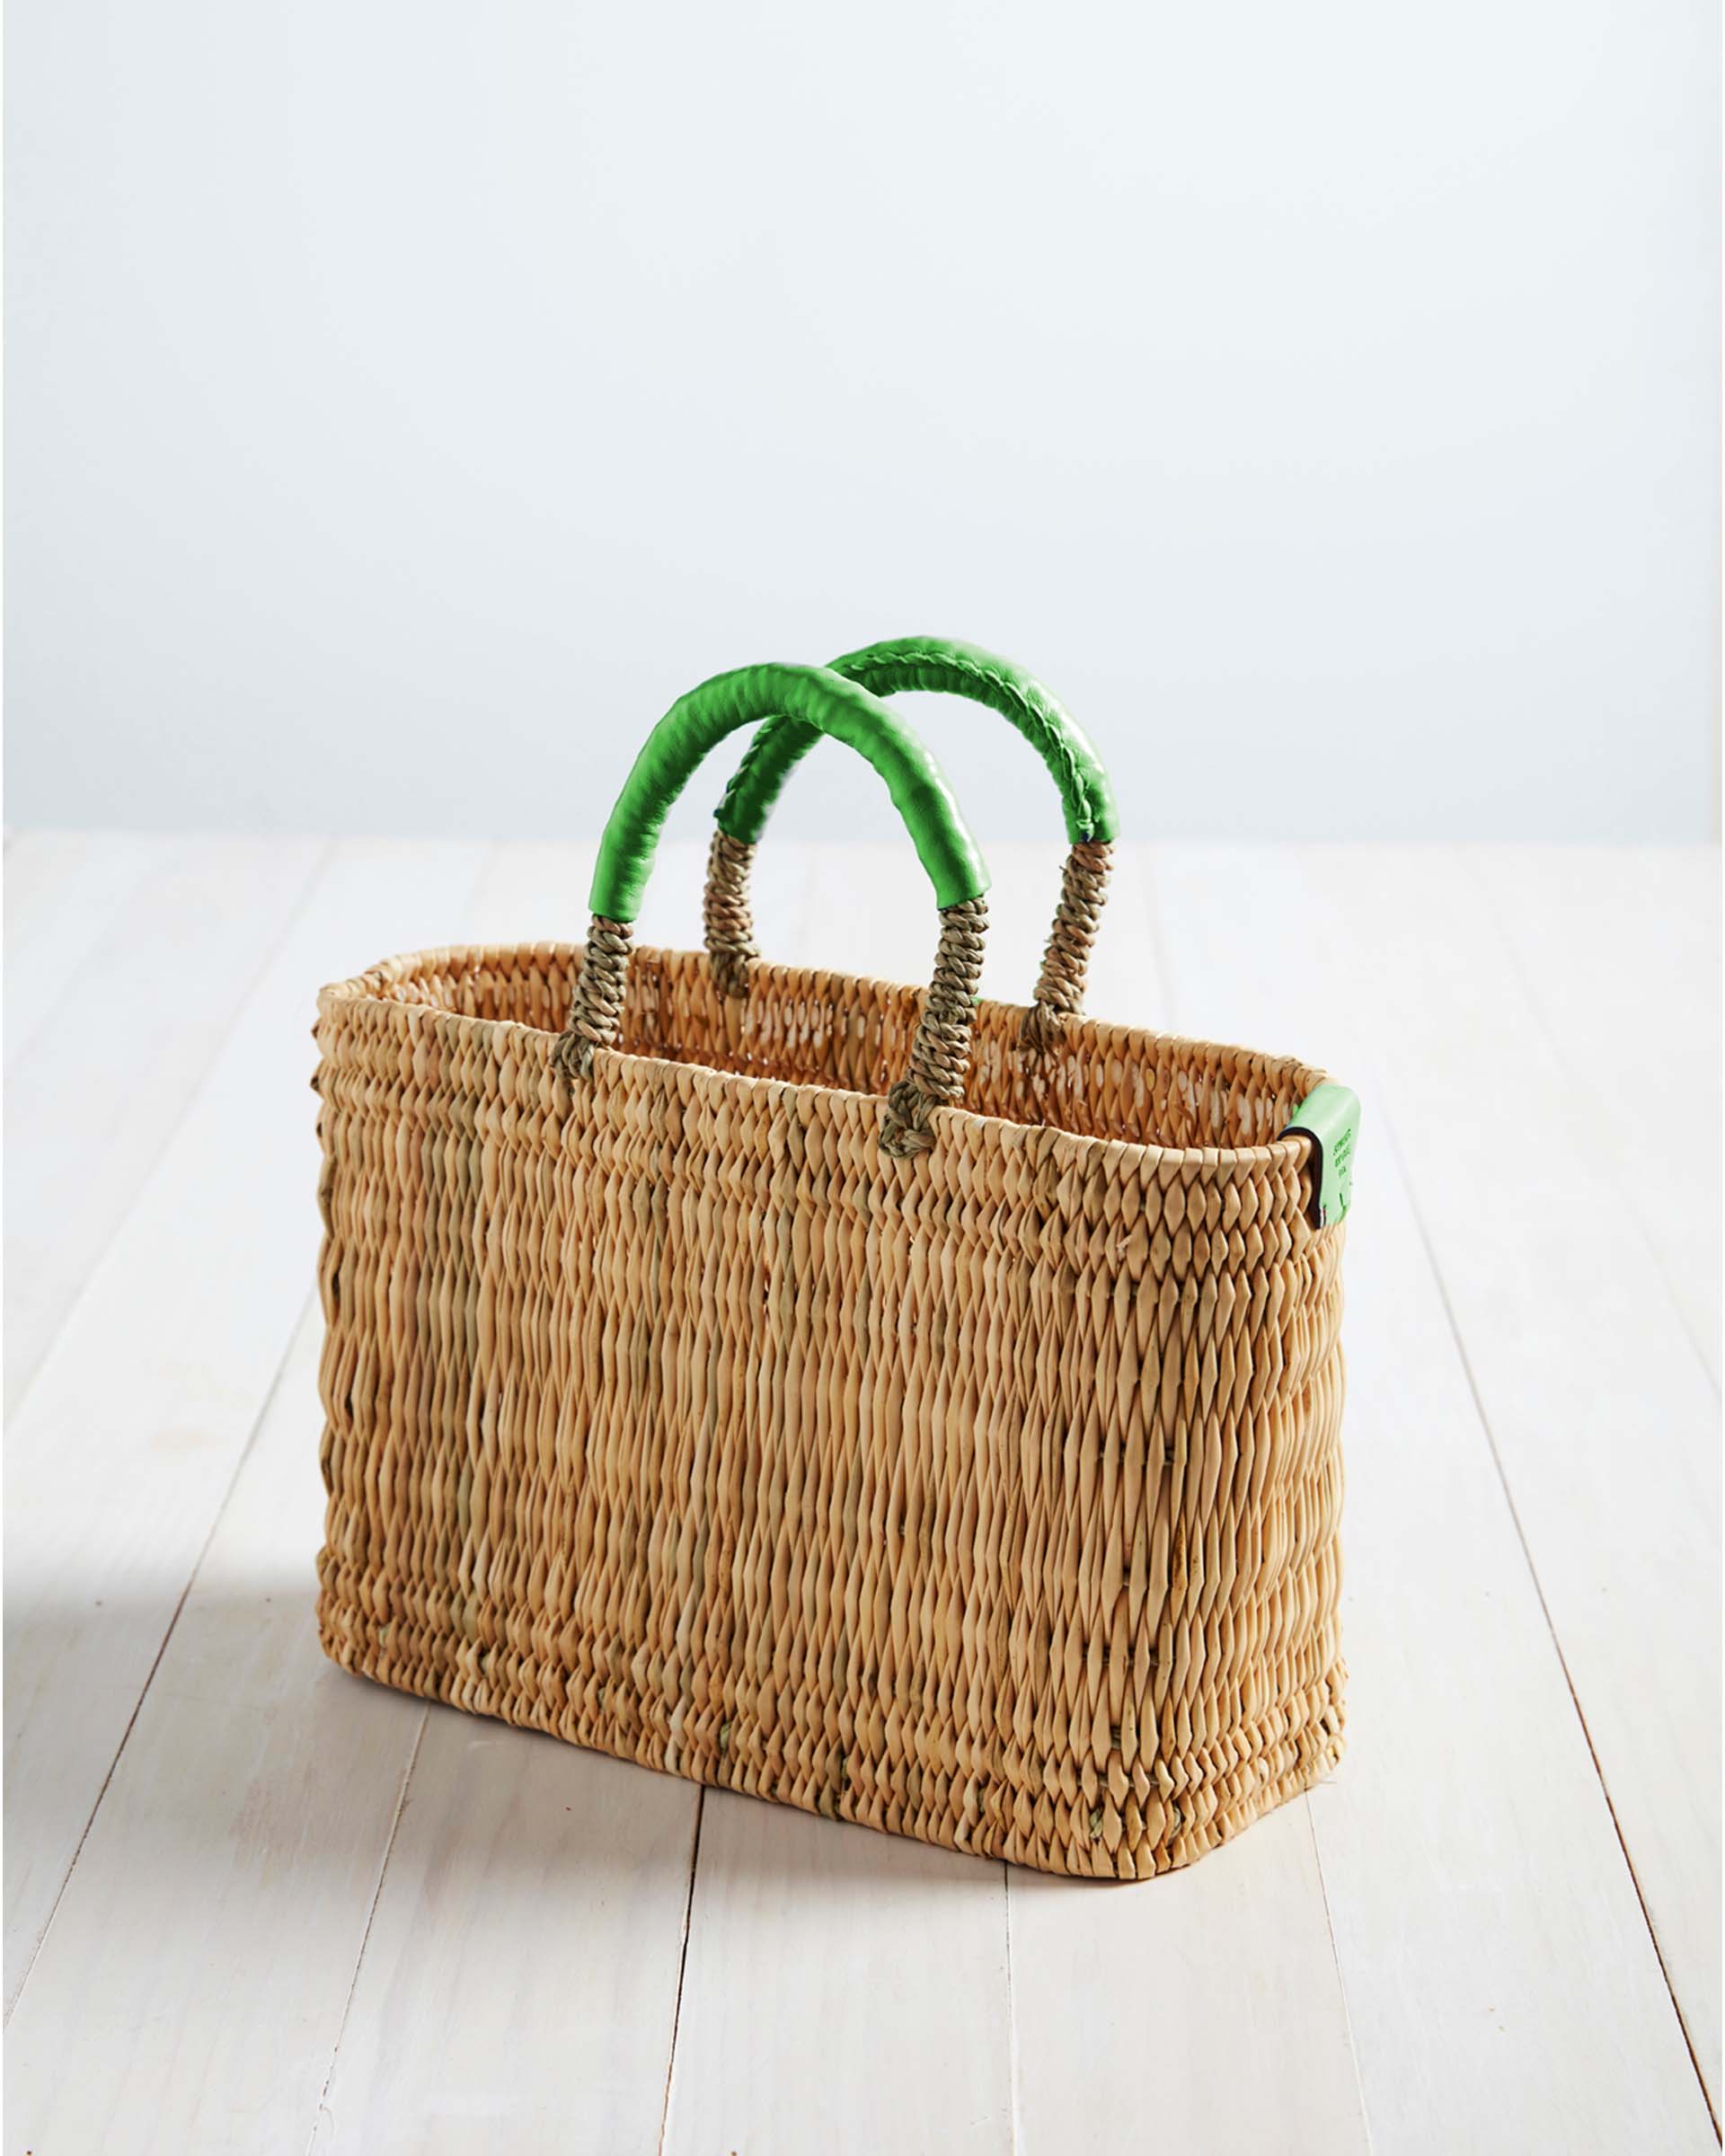 small medina market basket with green handles